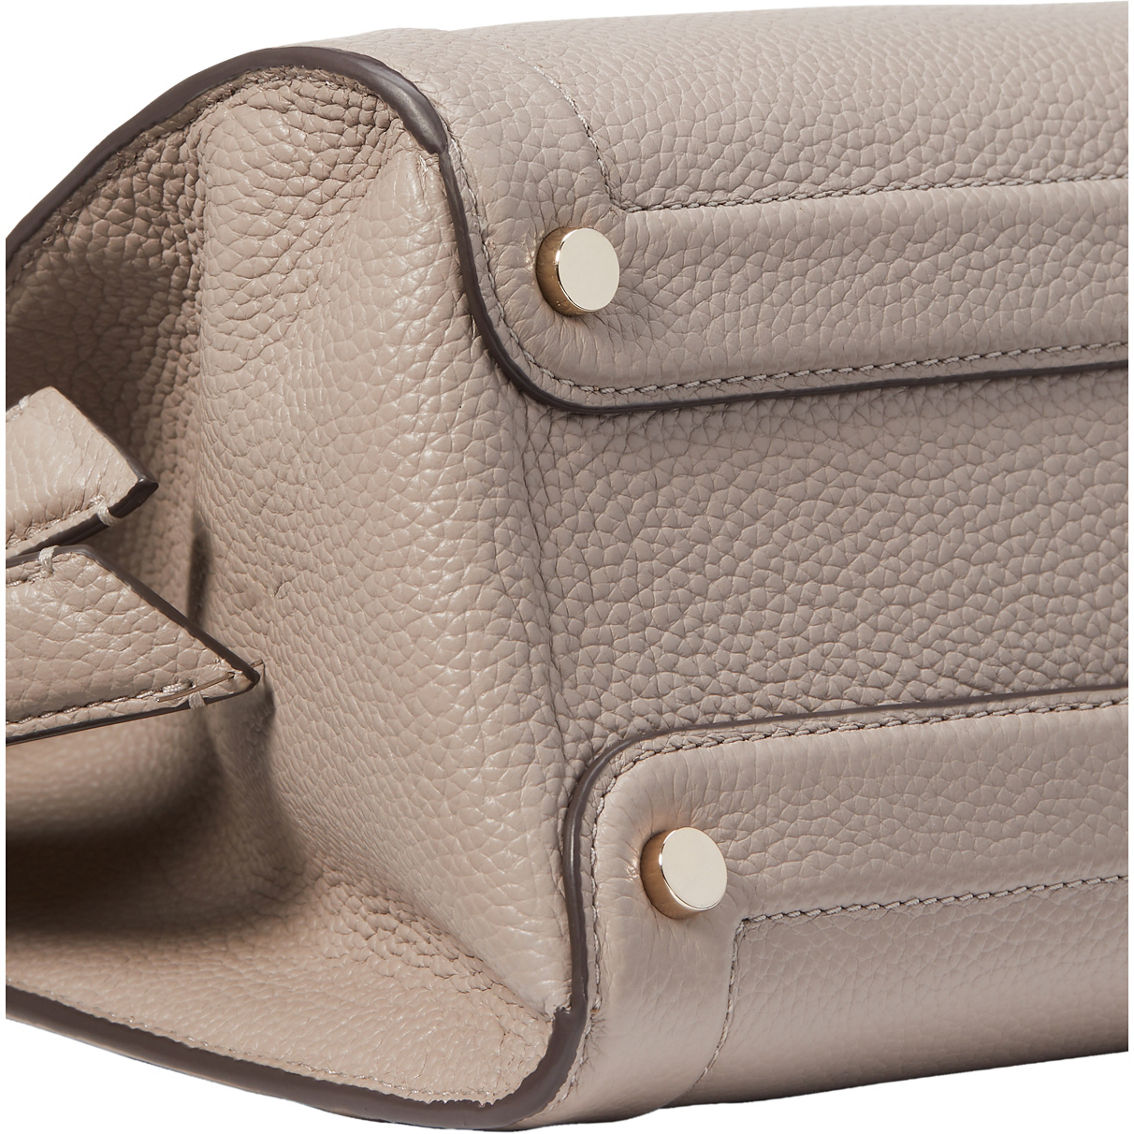 Kate Spade Knott Pebbled Leather Medium Zip Top Satchel - Image 6 of 6